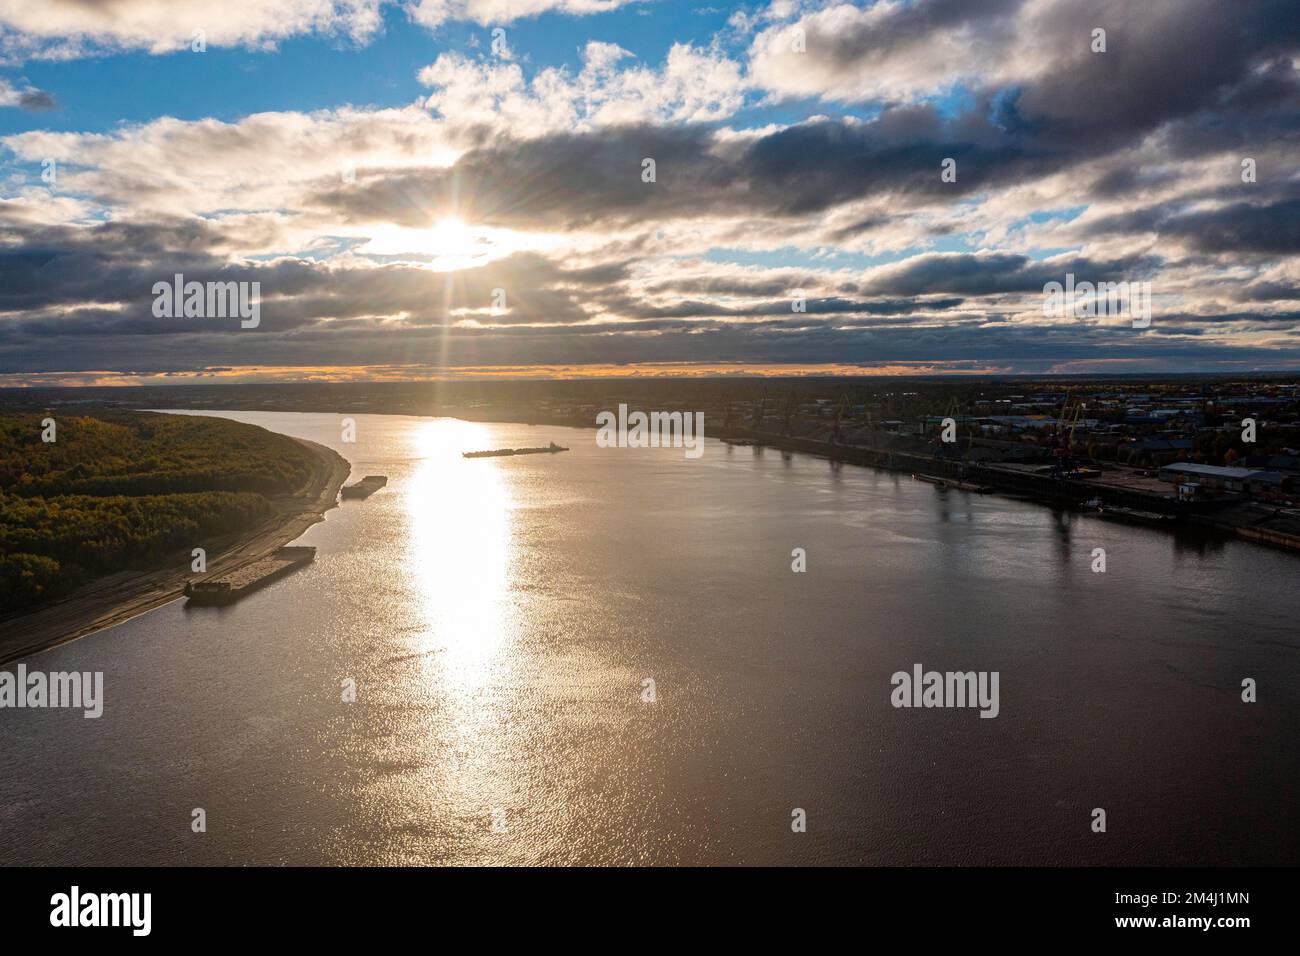 The Ob river at Nizhnevartovsk, Khanty-Mansi Autonomous Okrug, Russia Stock Photo